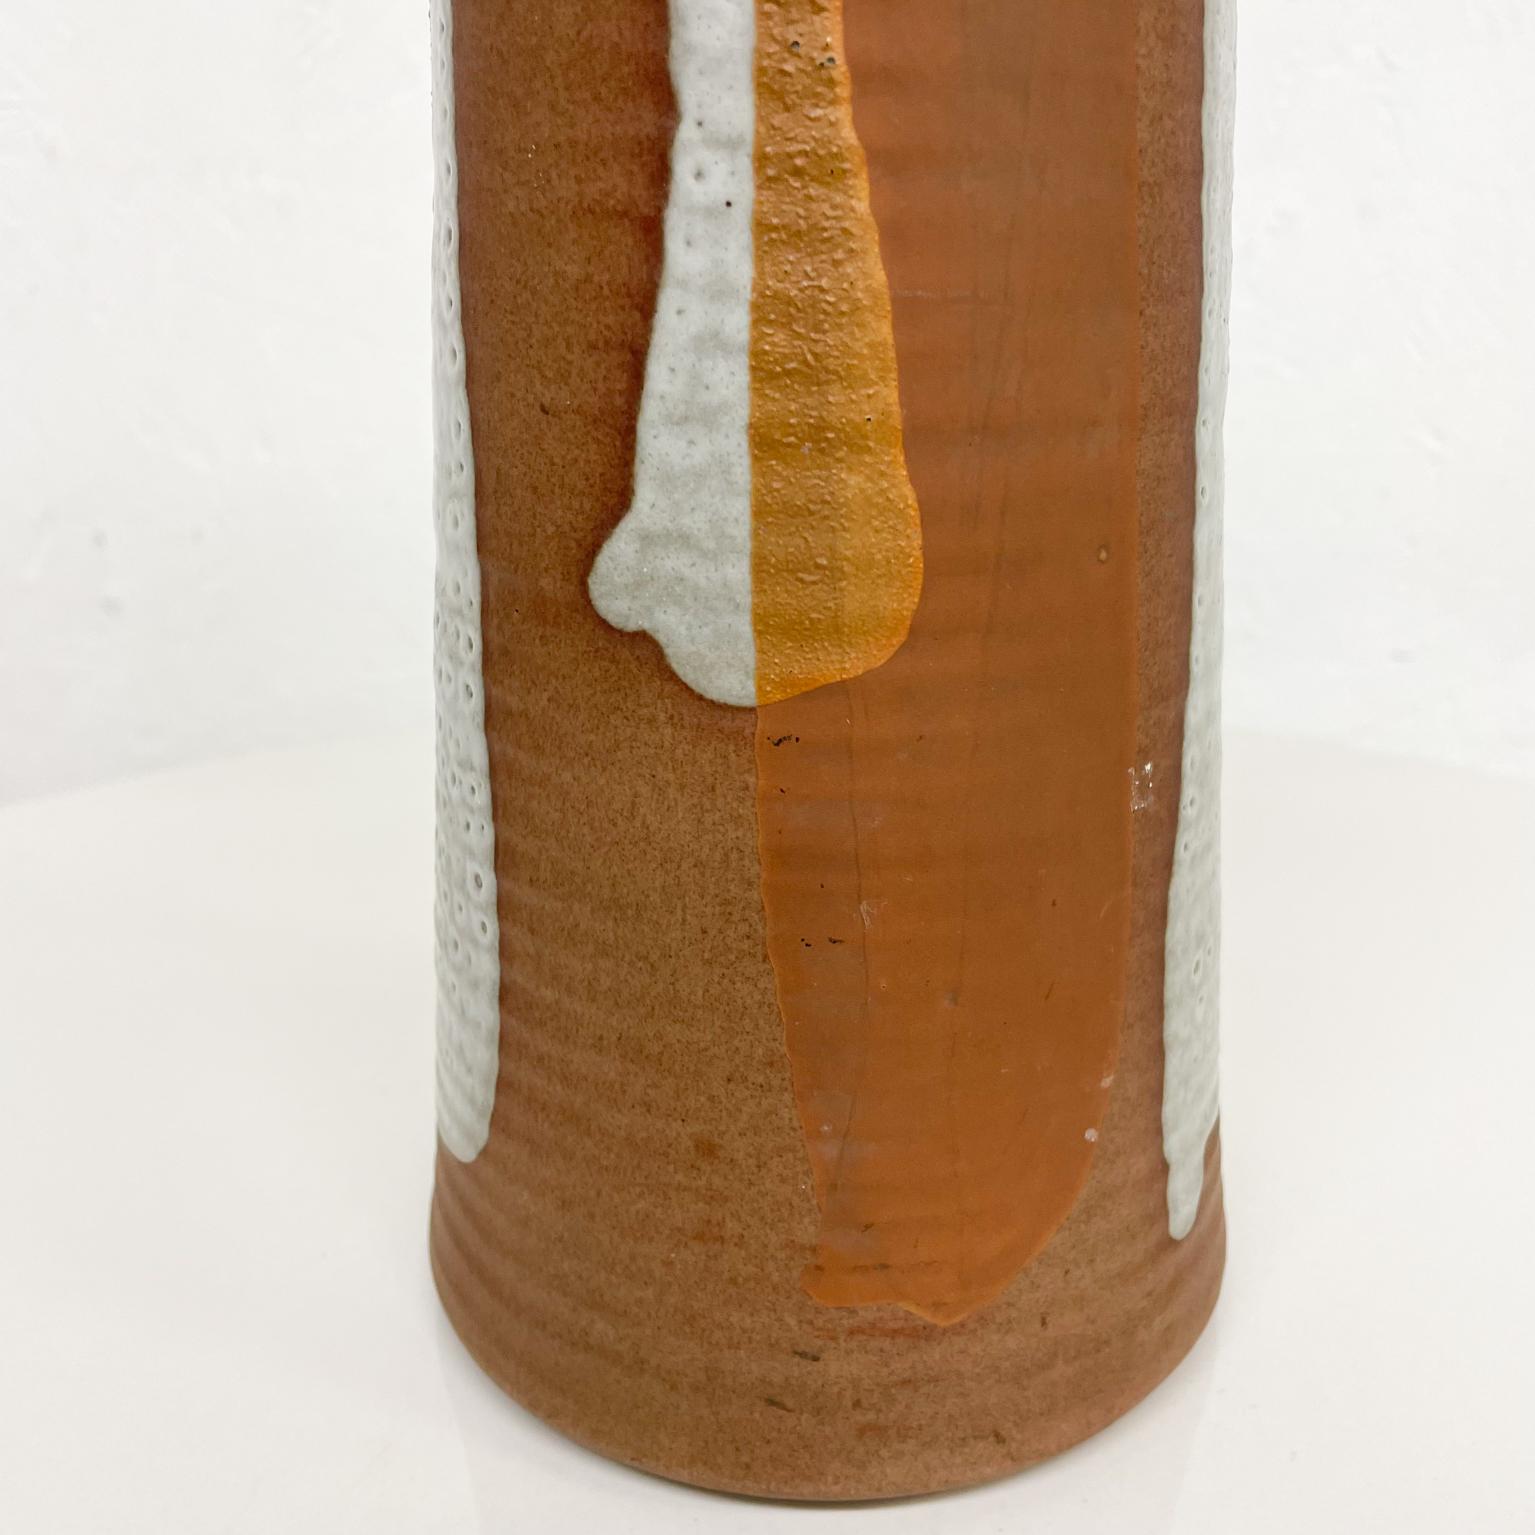 American Modern Art Sculptural Studio Pottery Vase Warm Colors David Cressey Style 1970s For Sale